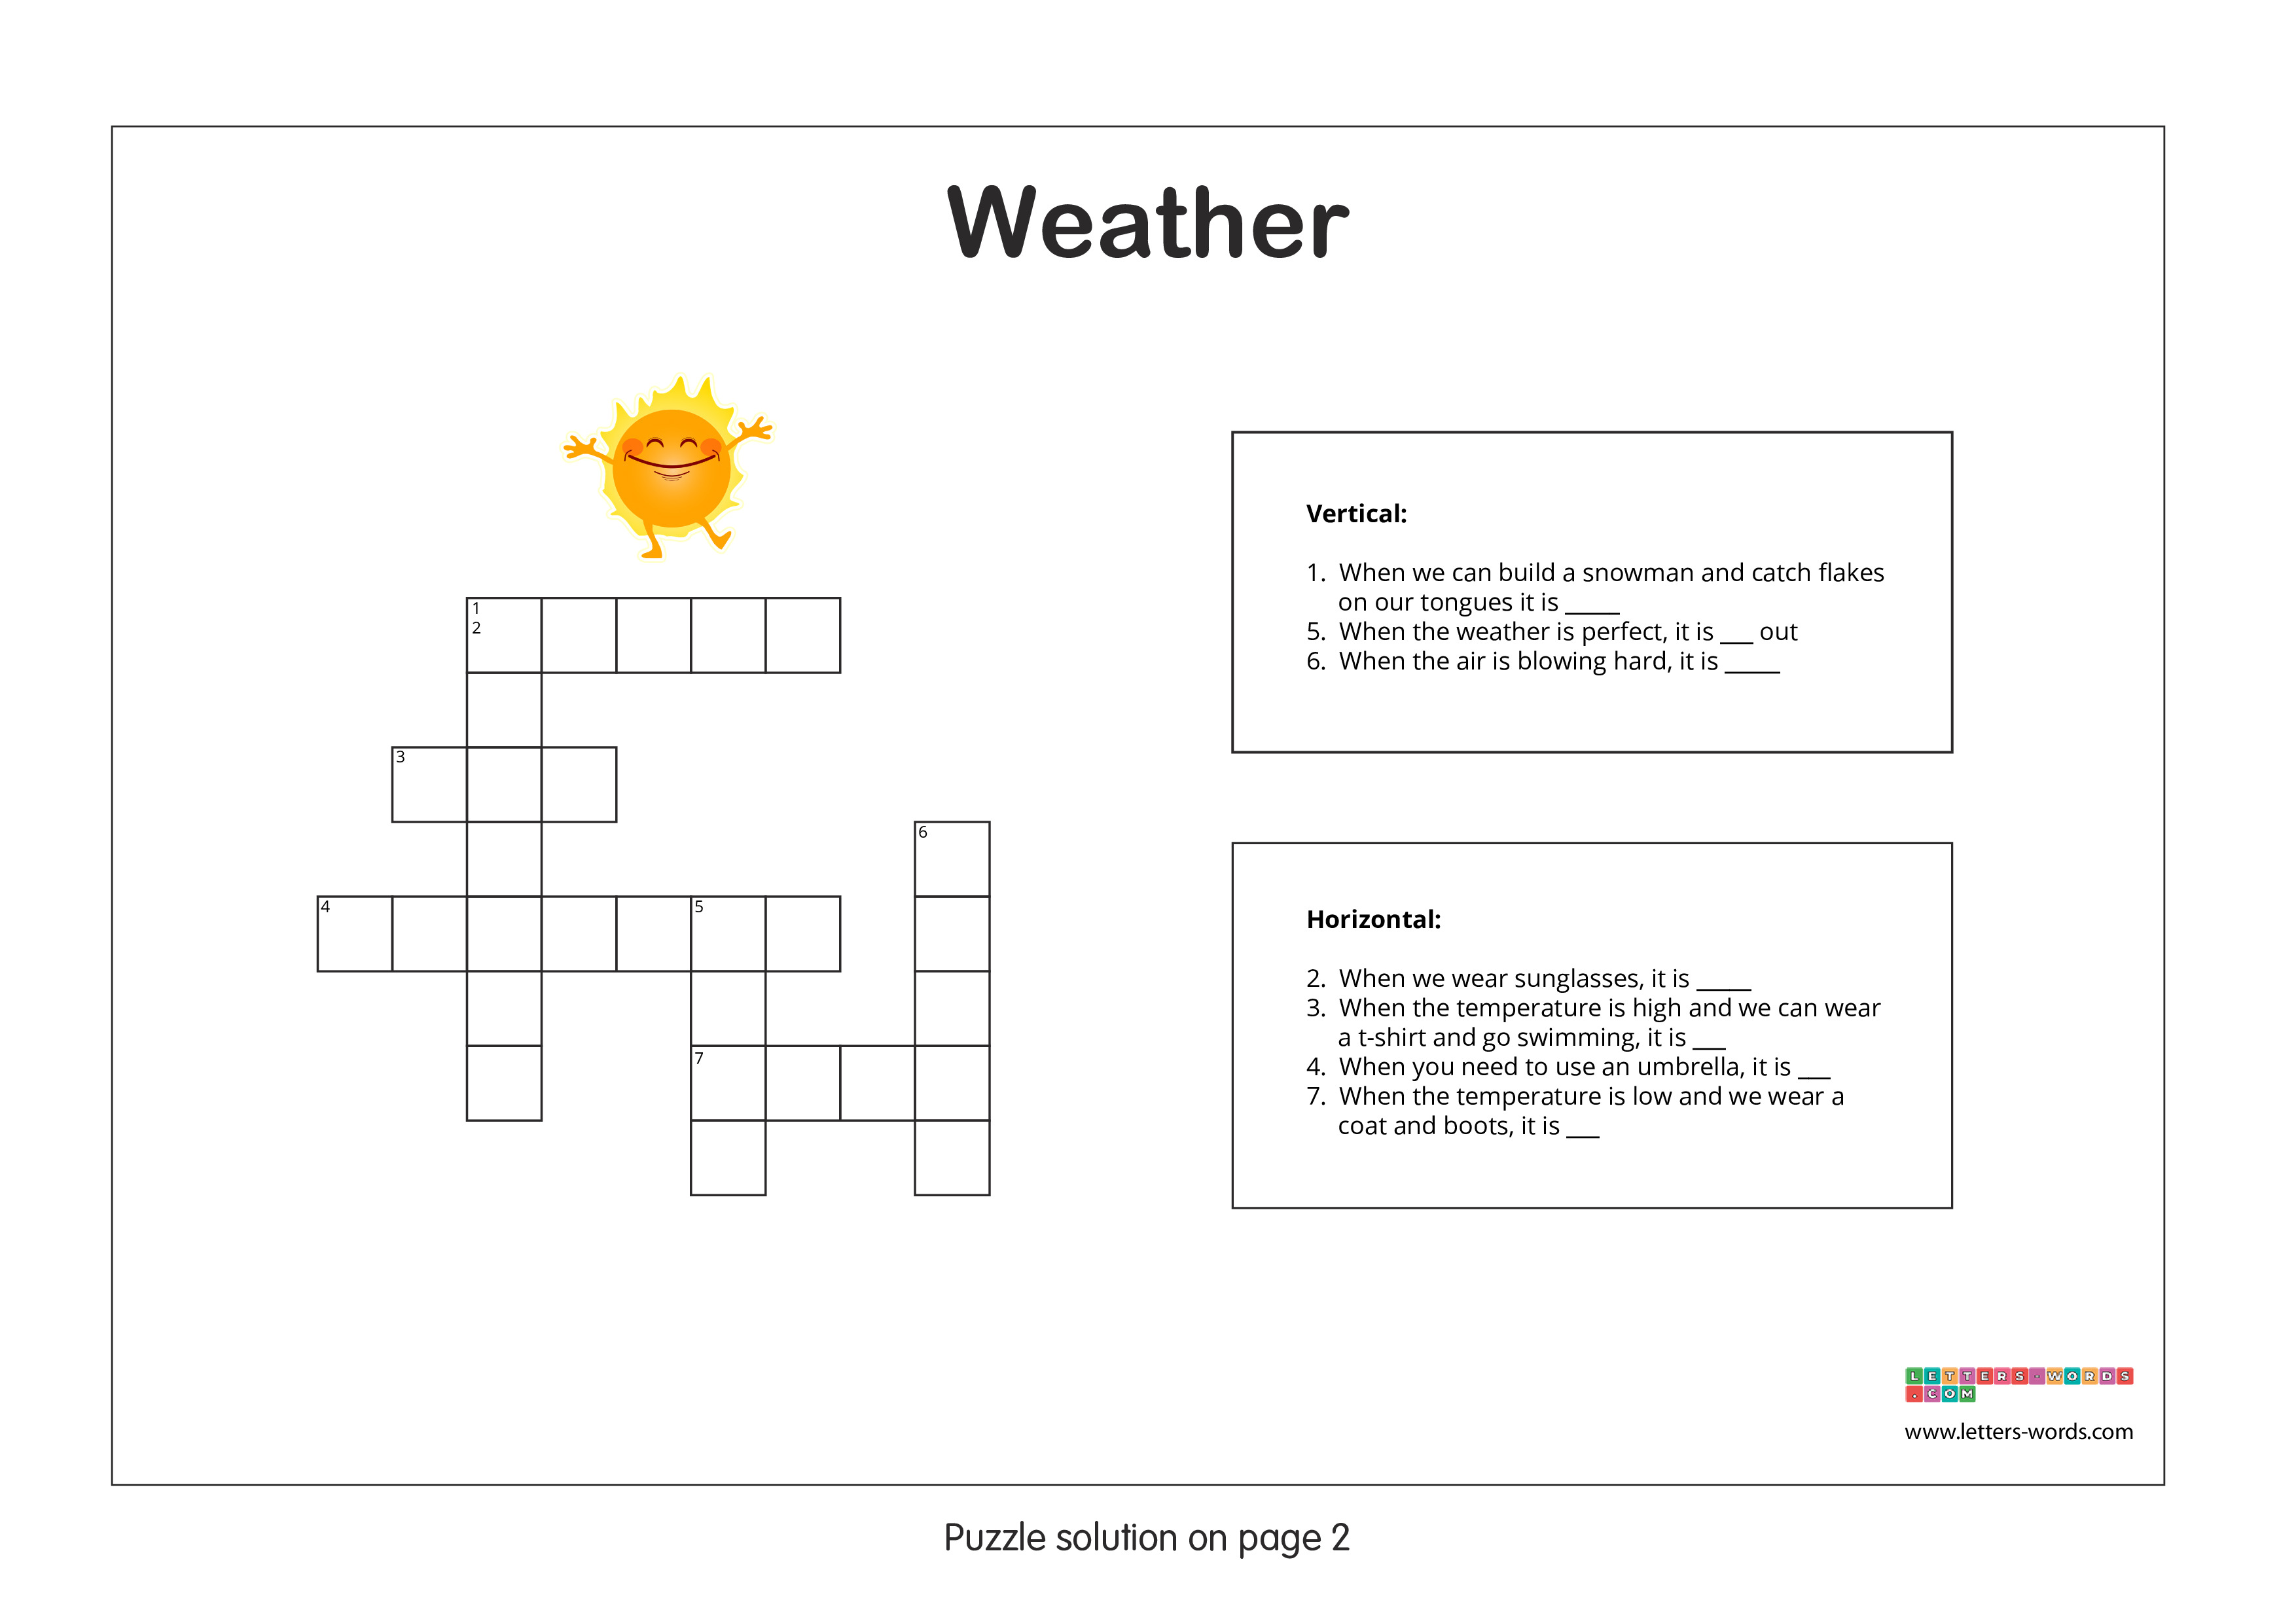 Elementary School Students Crossword Puzzle - Weather